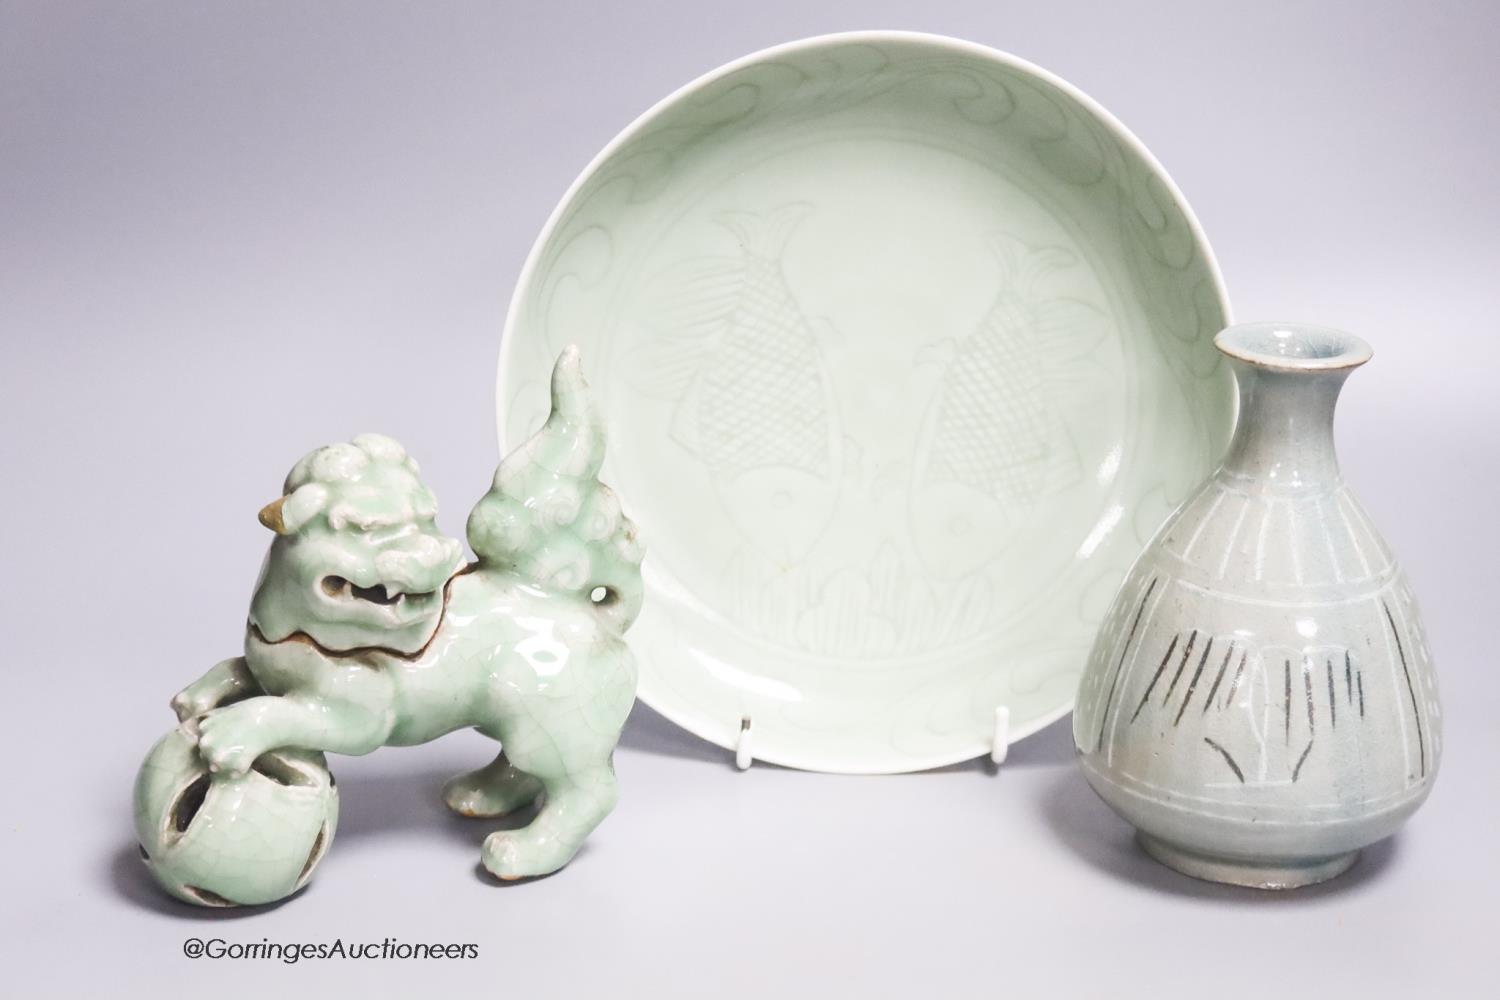 A Korean celadon glazed vase, a Chinese celadon glazed dish together with a similar shi-shi box and